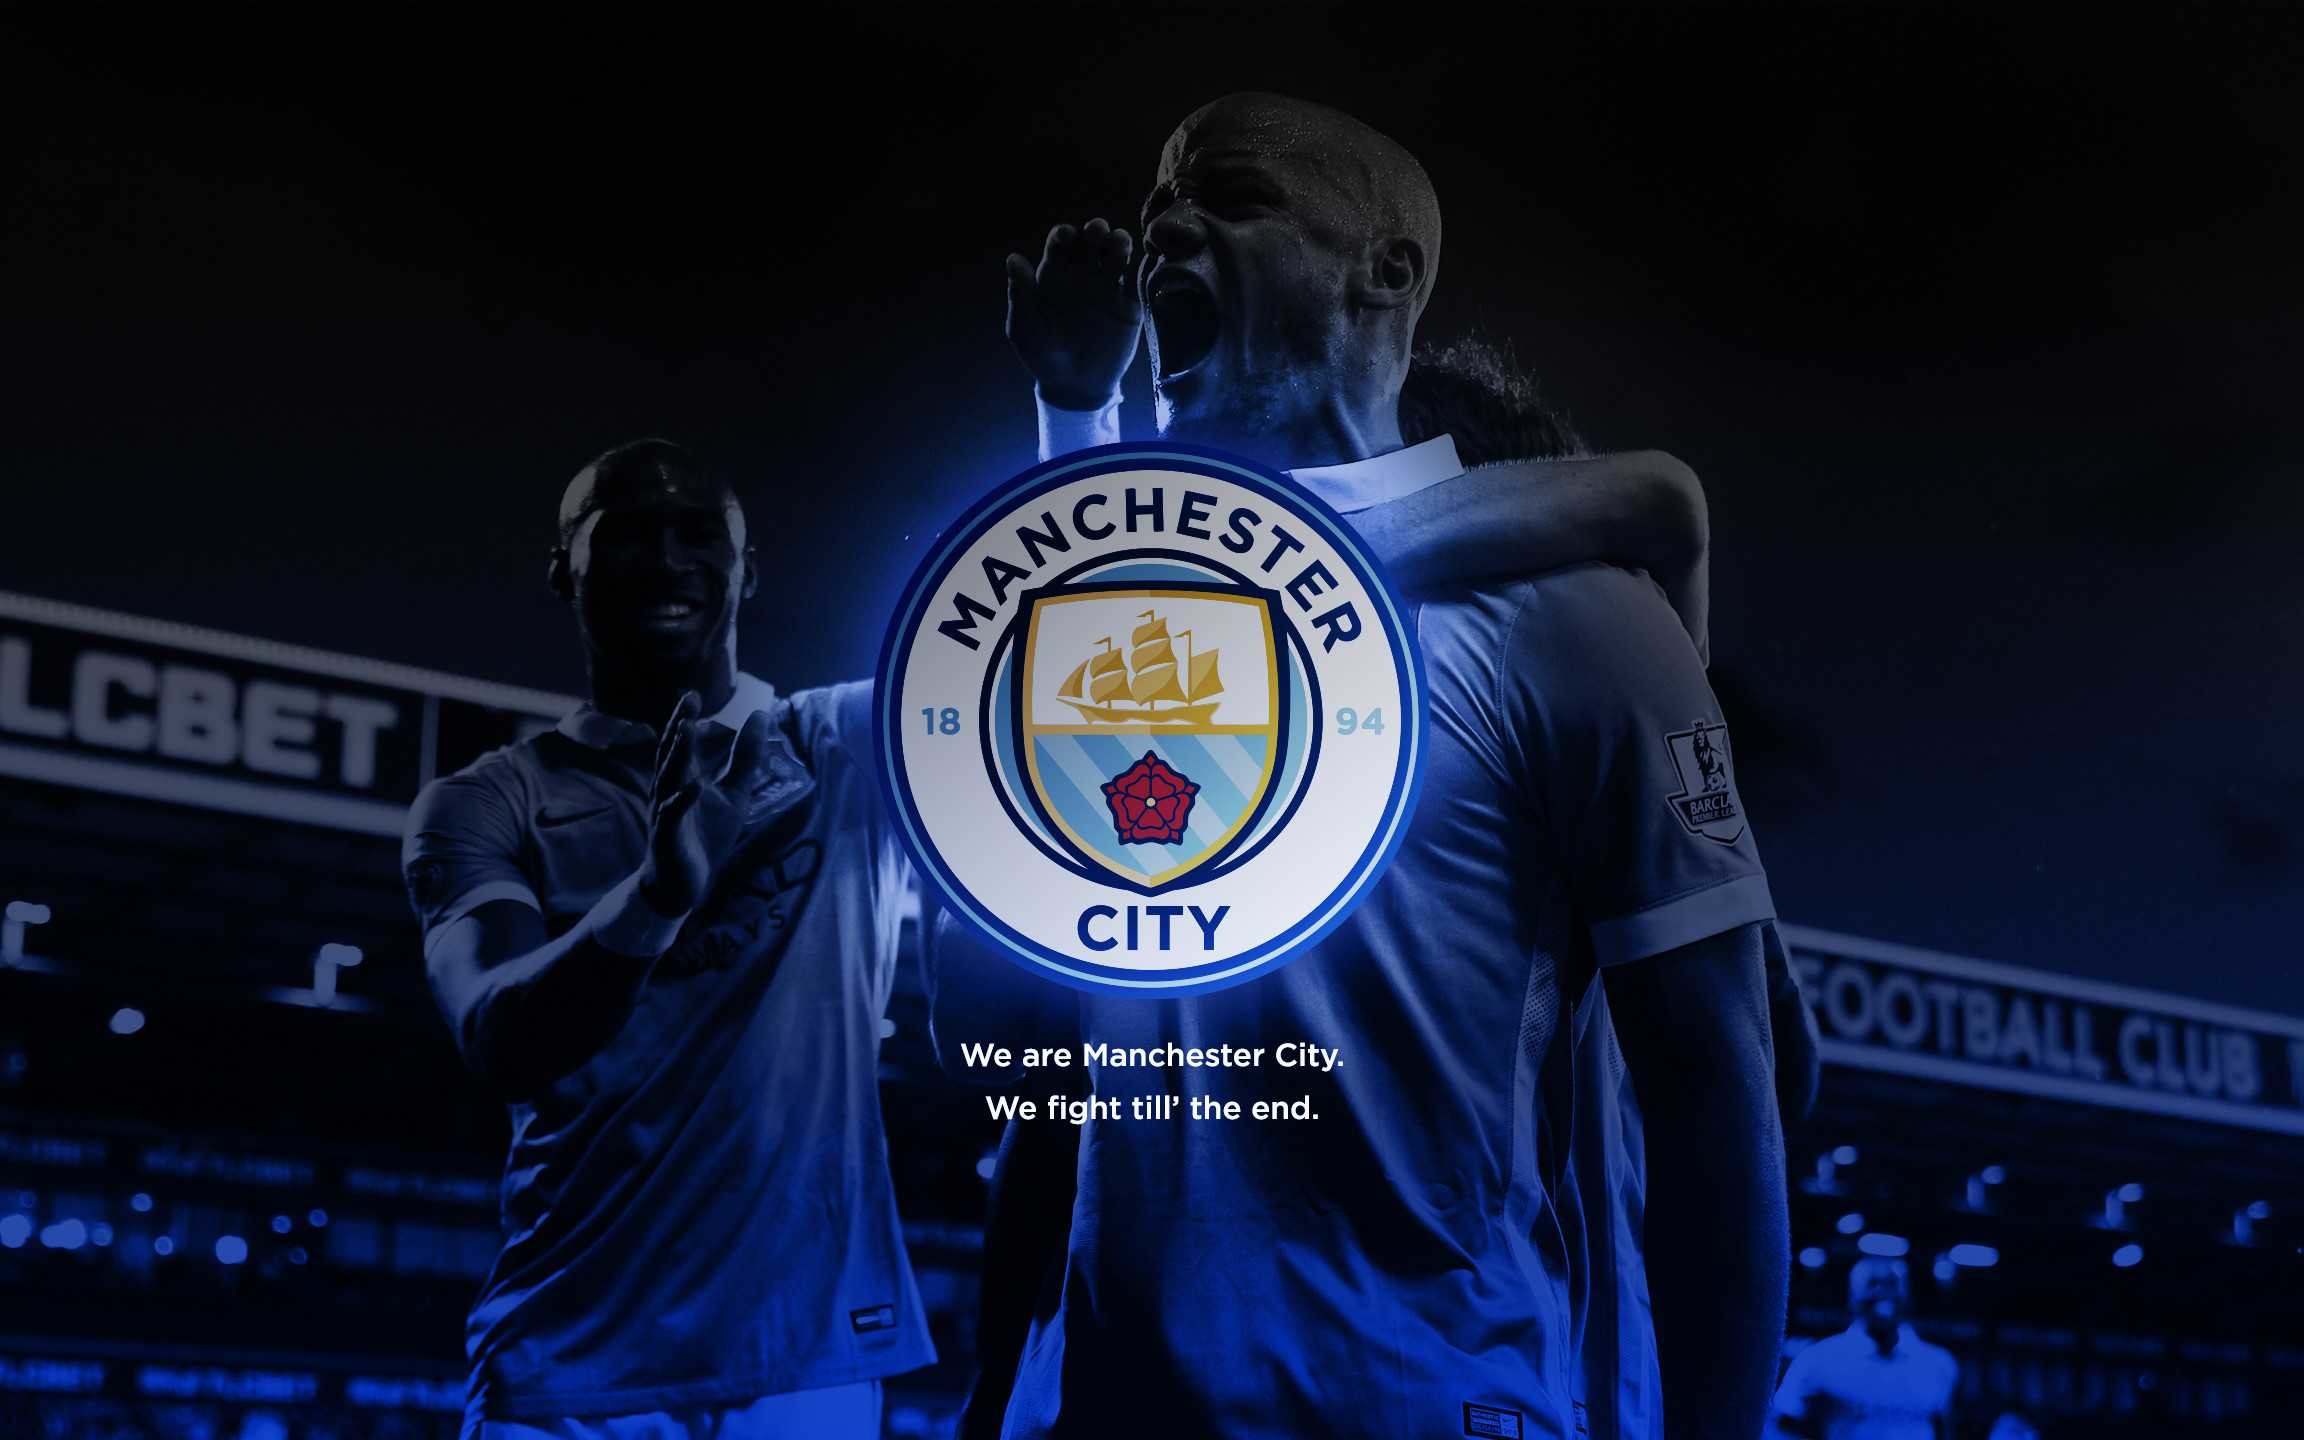 2304x1440 Manchester City 2018 Wallpaper Hd Of Mobile Phones Logo ~ Gipsypixel.com